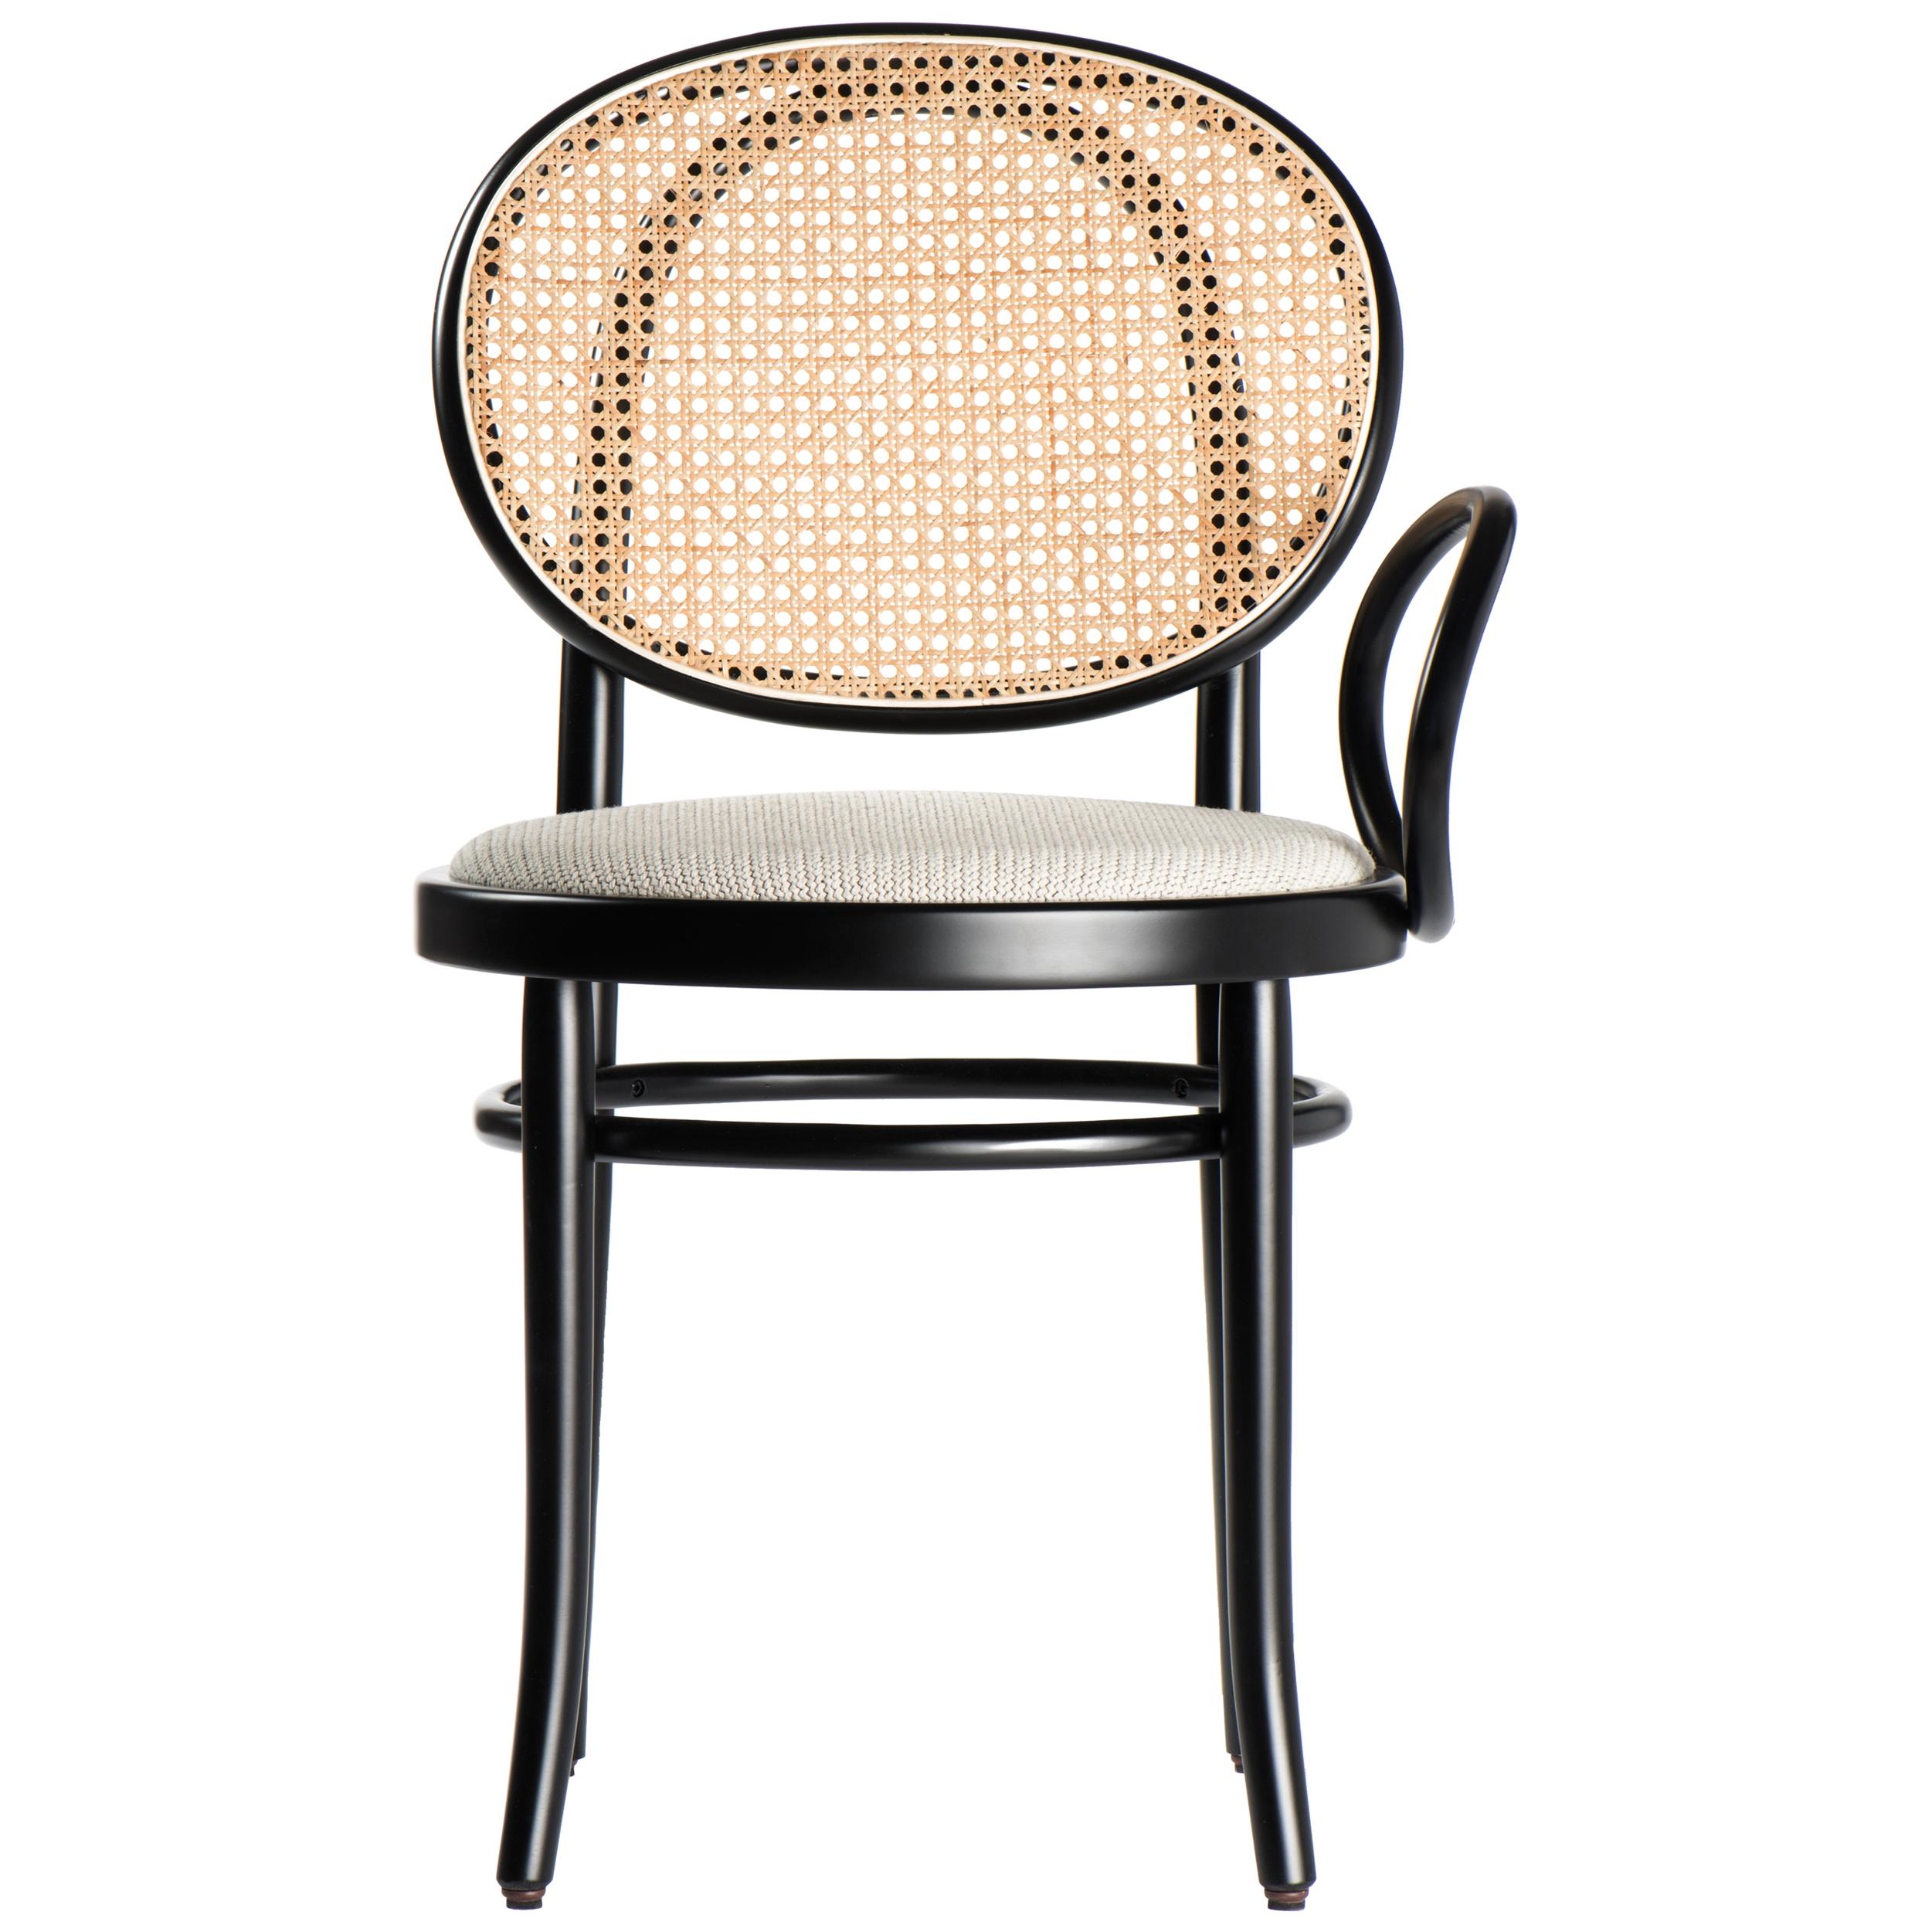 Gebrüder Thonet Vienna GmbH N.0 Single Armrest Chair in Black with Cane Backrest